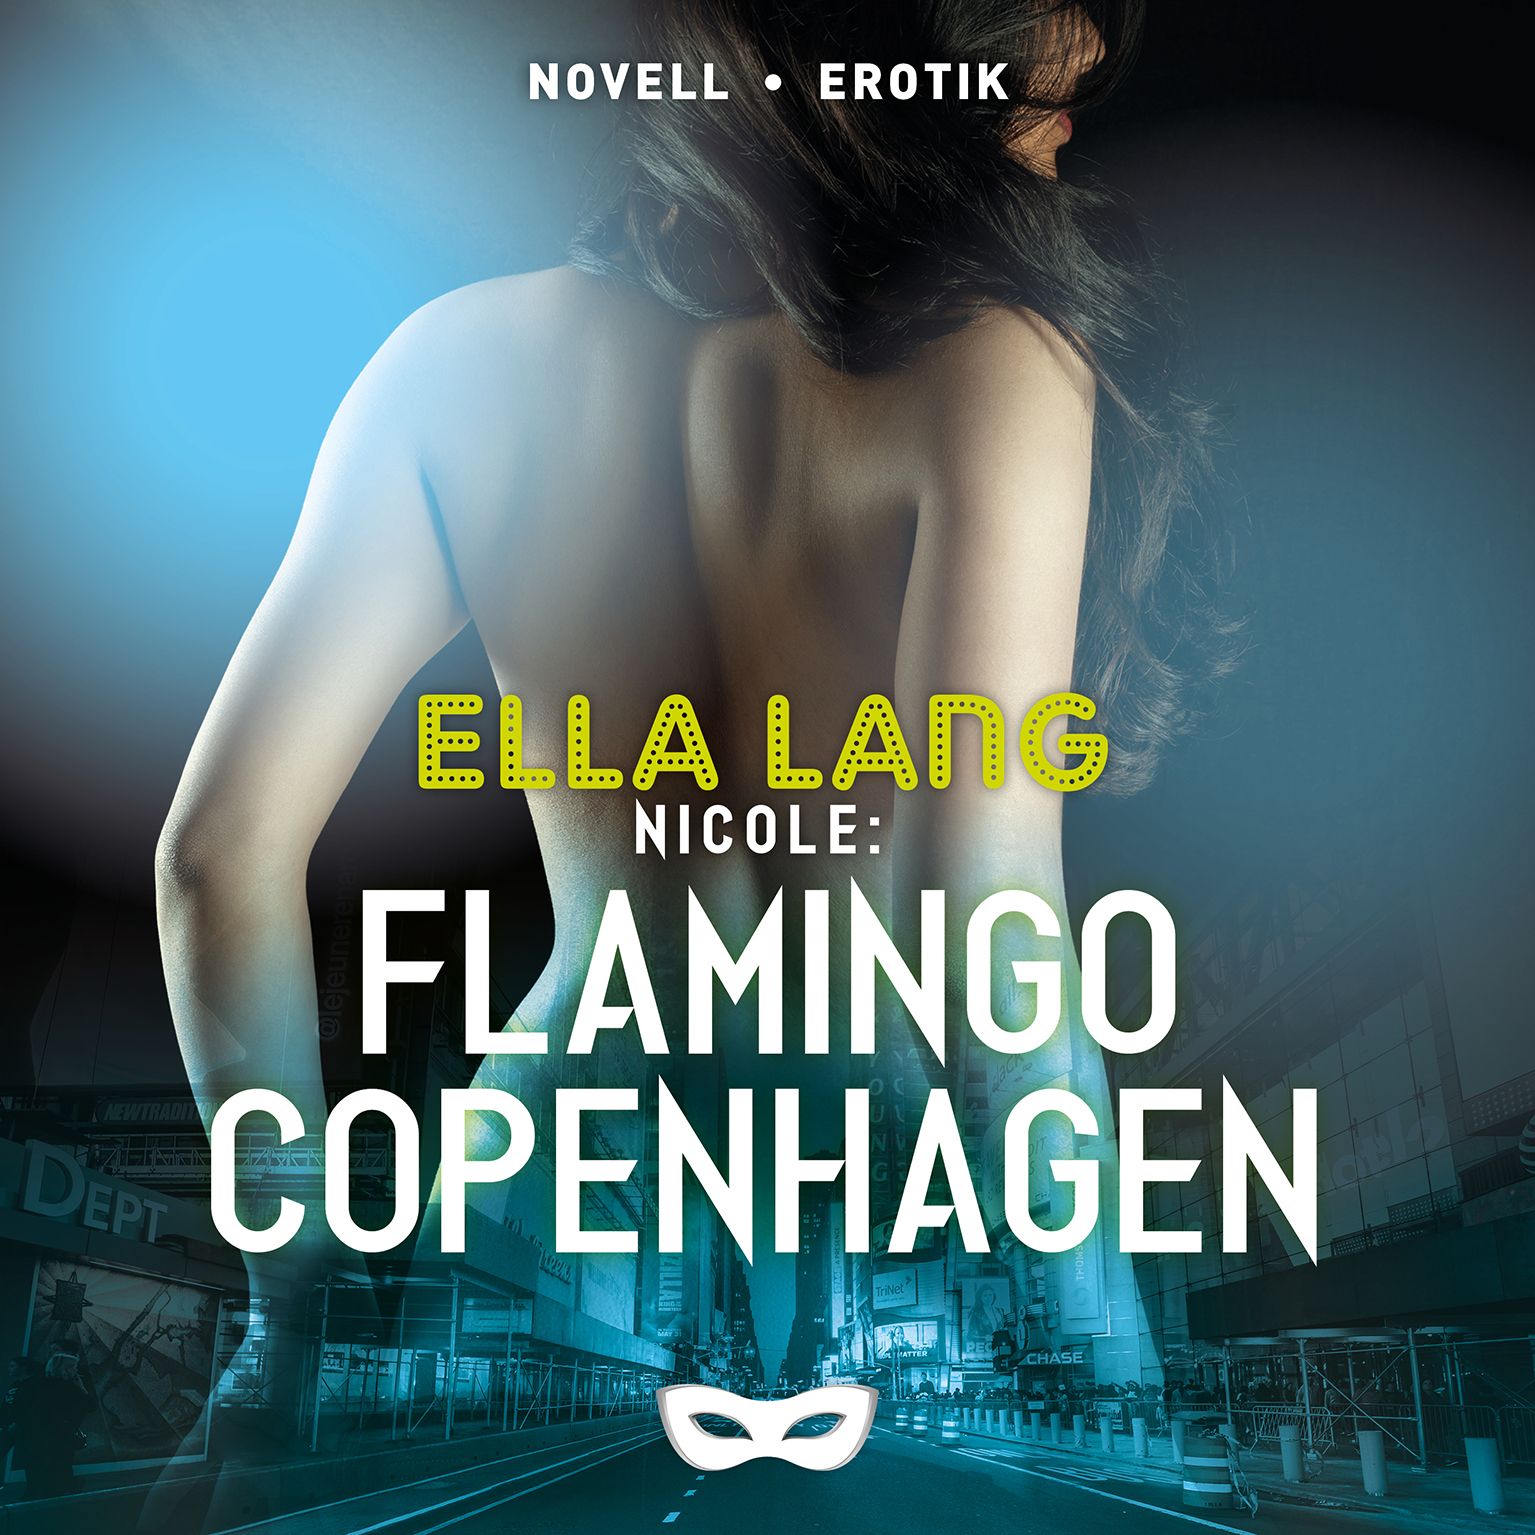 Nicole: Flamingo Copenhagen, lydbog af Ella Lang